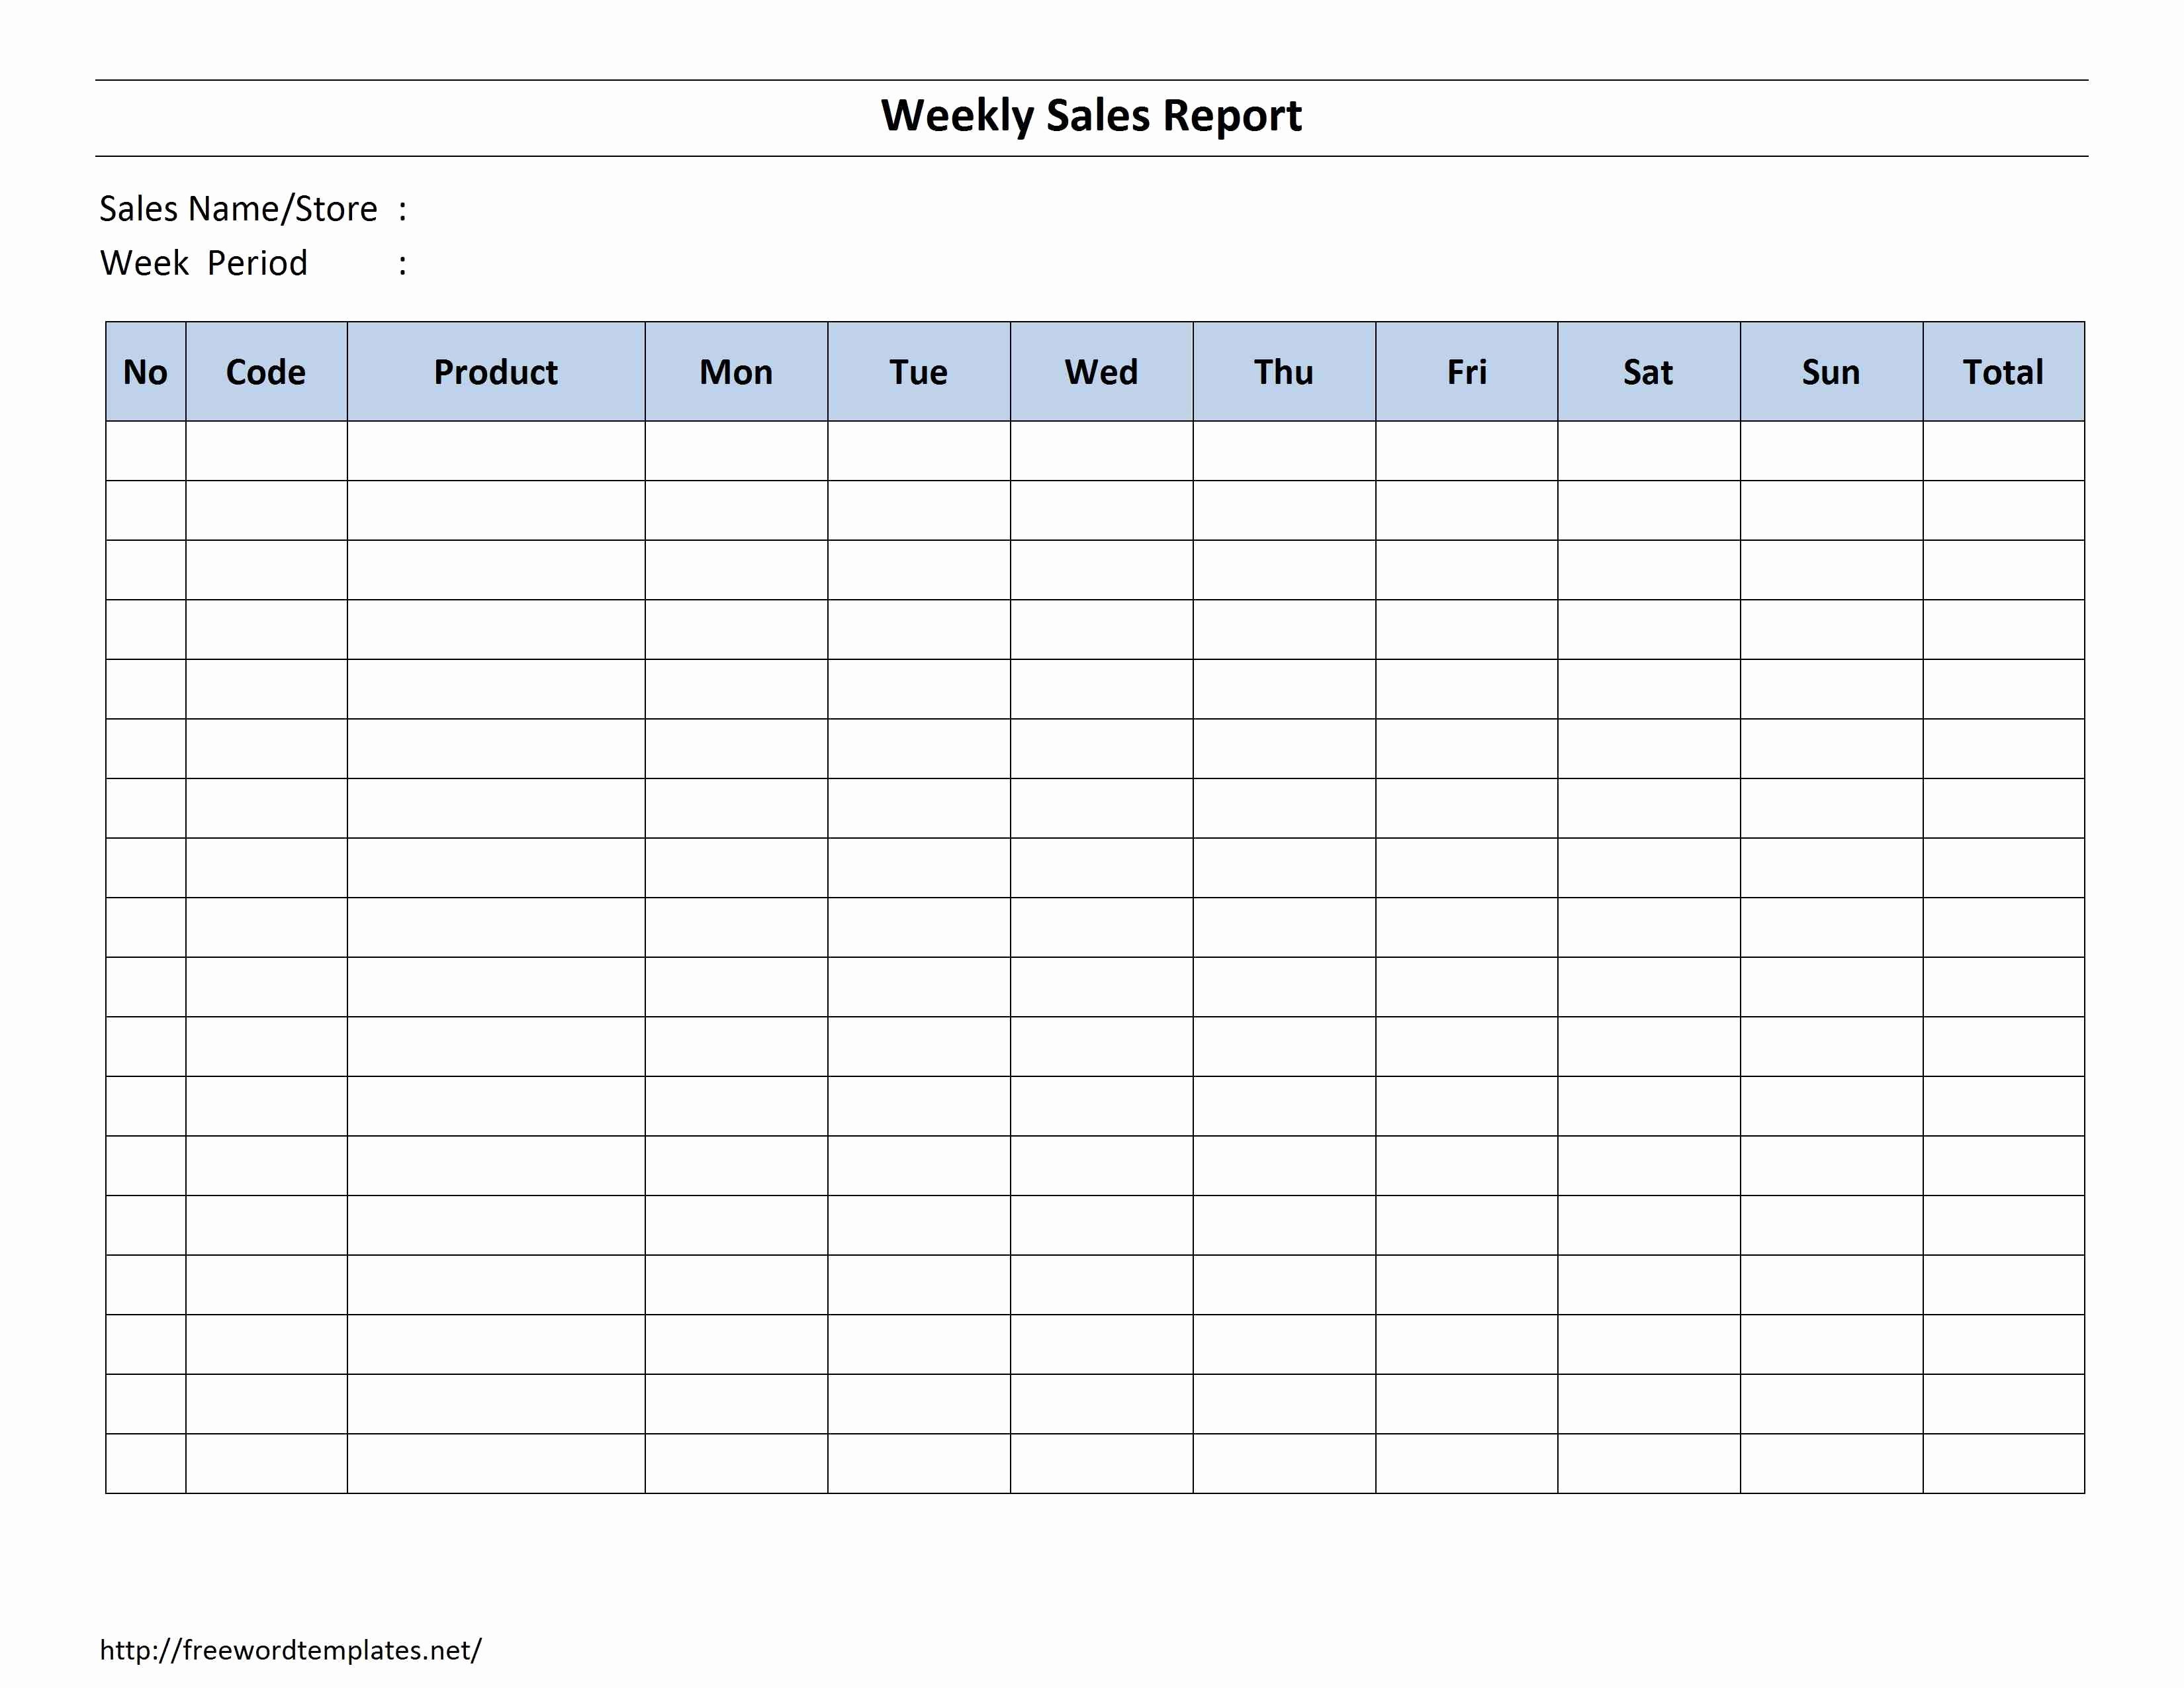 Sales Report Template Excel Best Of Weekly Sales Activity Report Template Sample Excel format